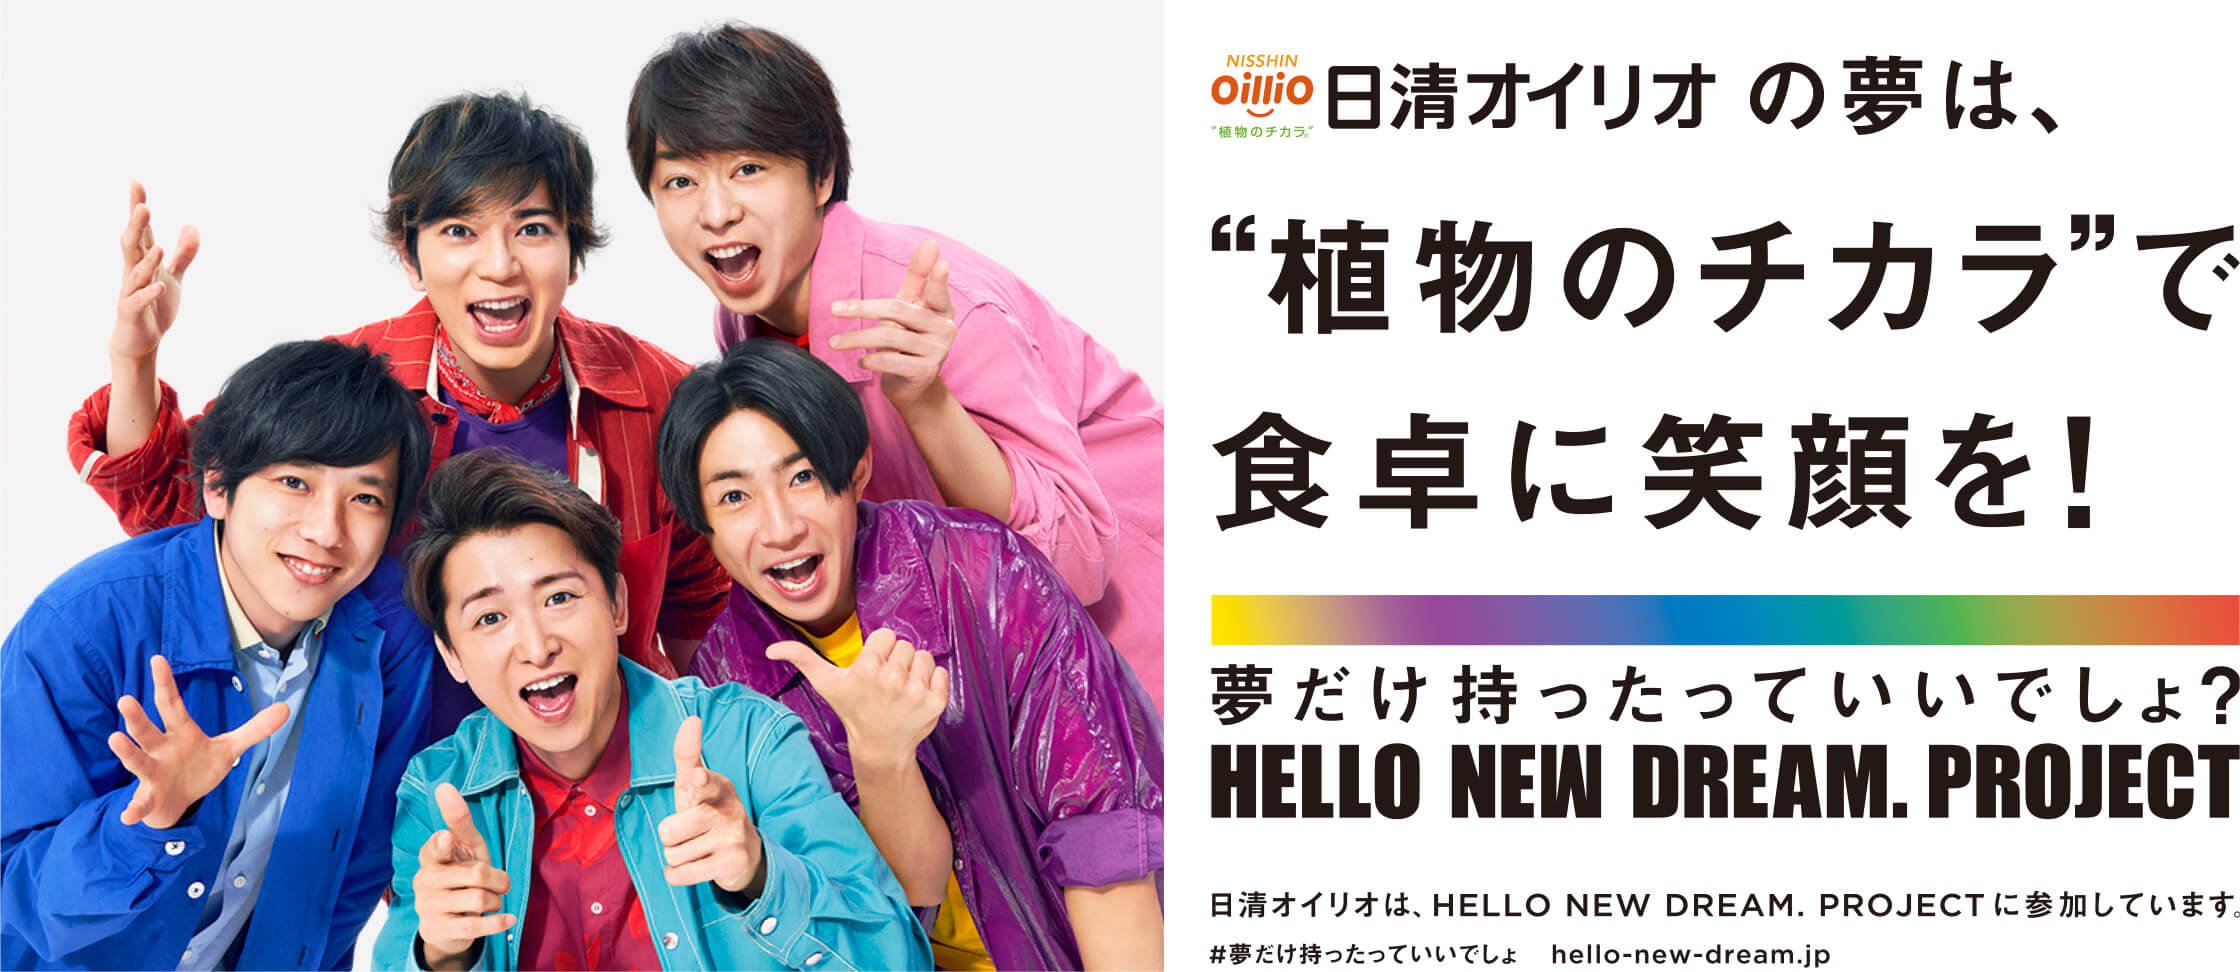 Hello New Dream Project 日清オイリオ